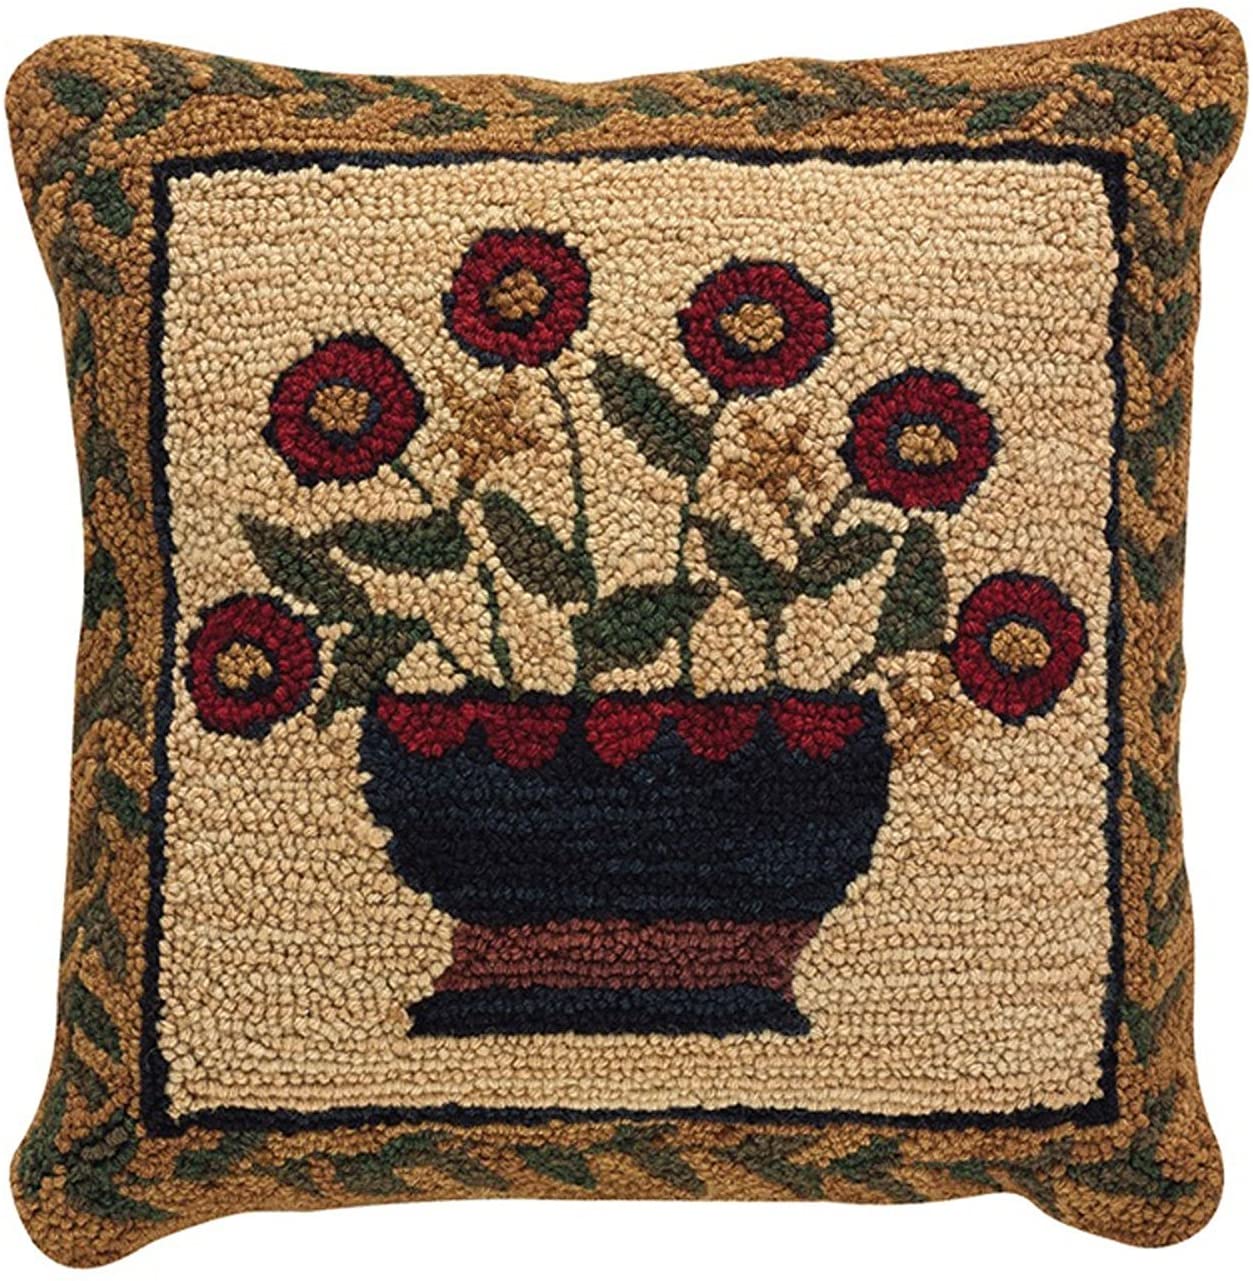 Flower Basket Hooked Pillow Set- Down Feather Fill 18"x18" - Park Designs